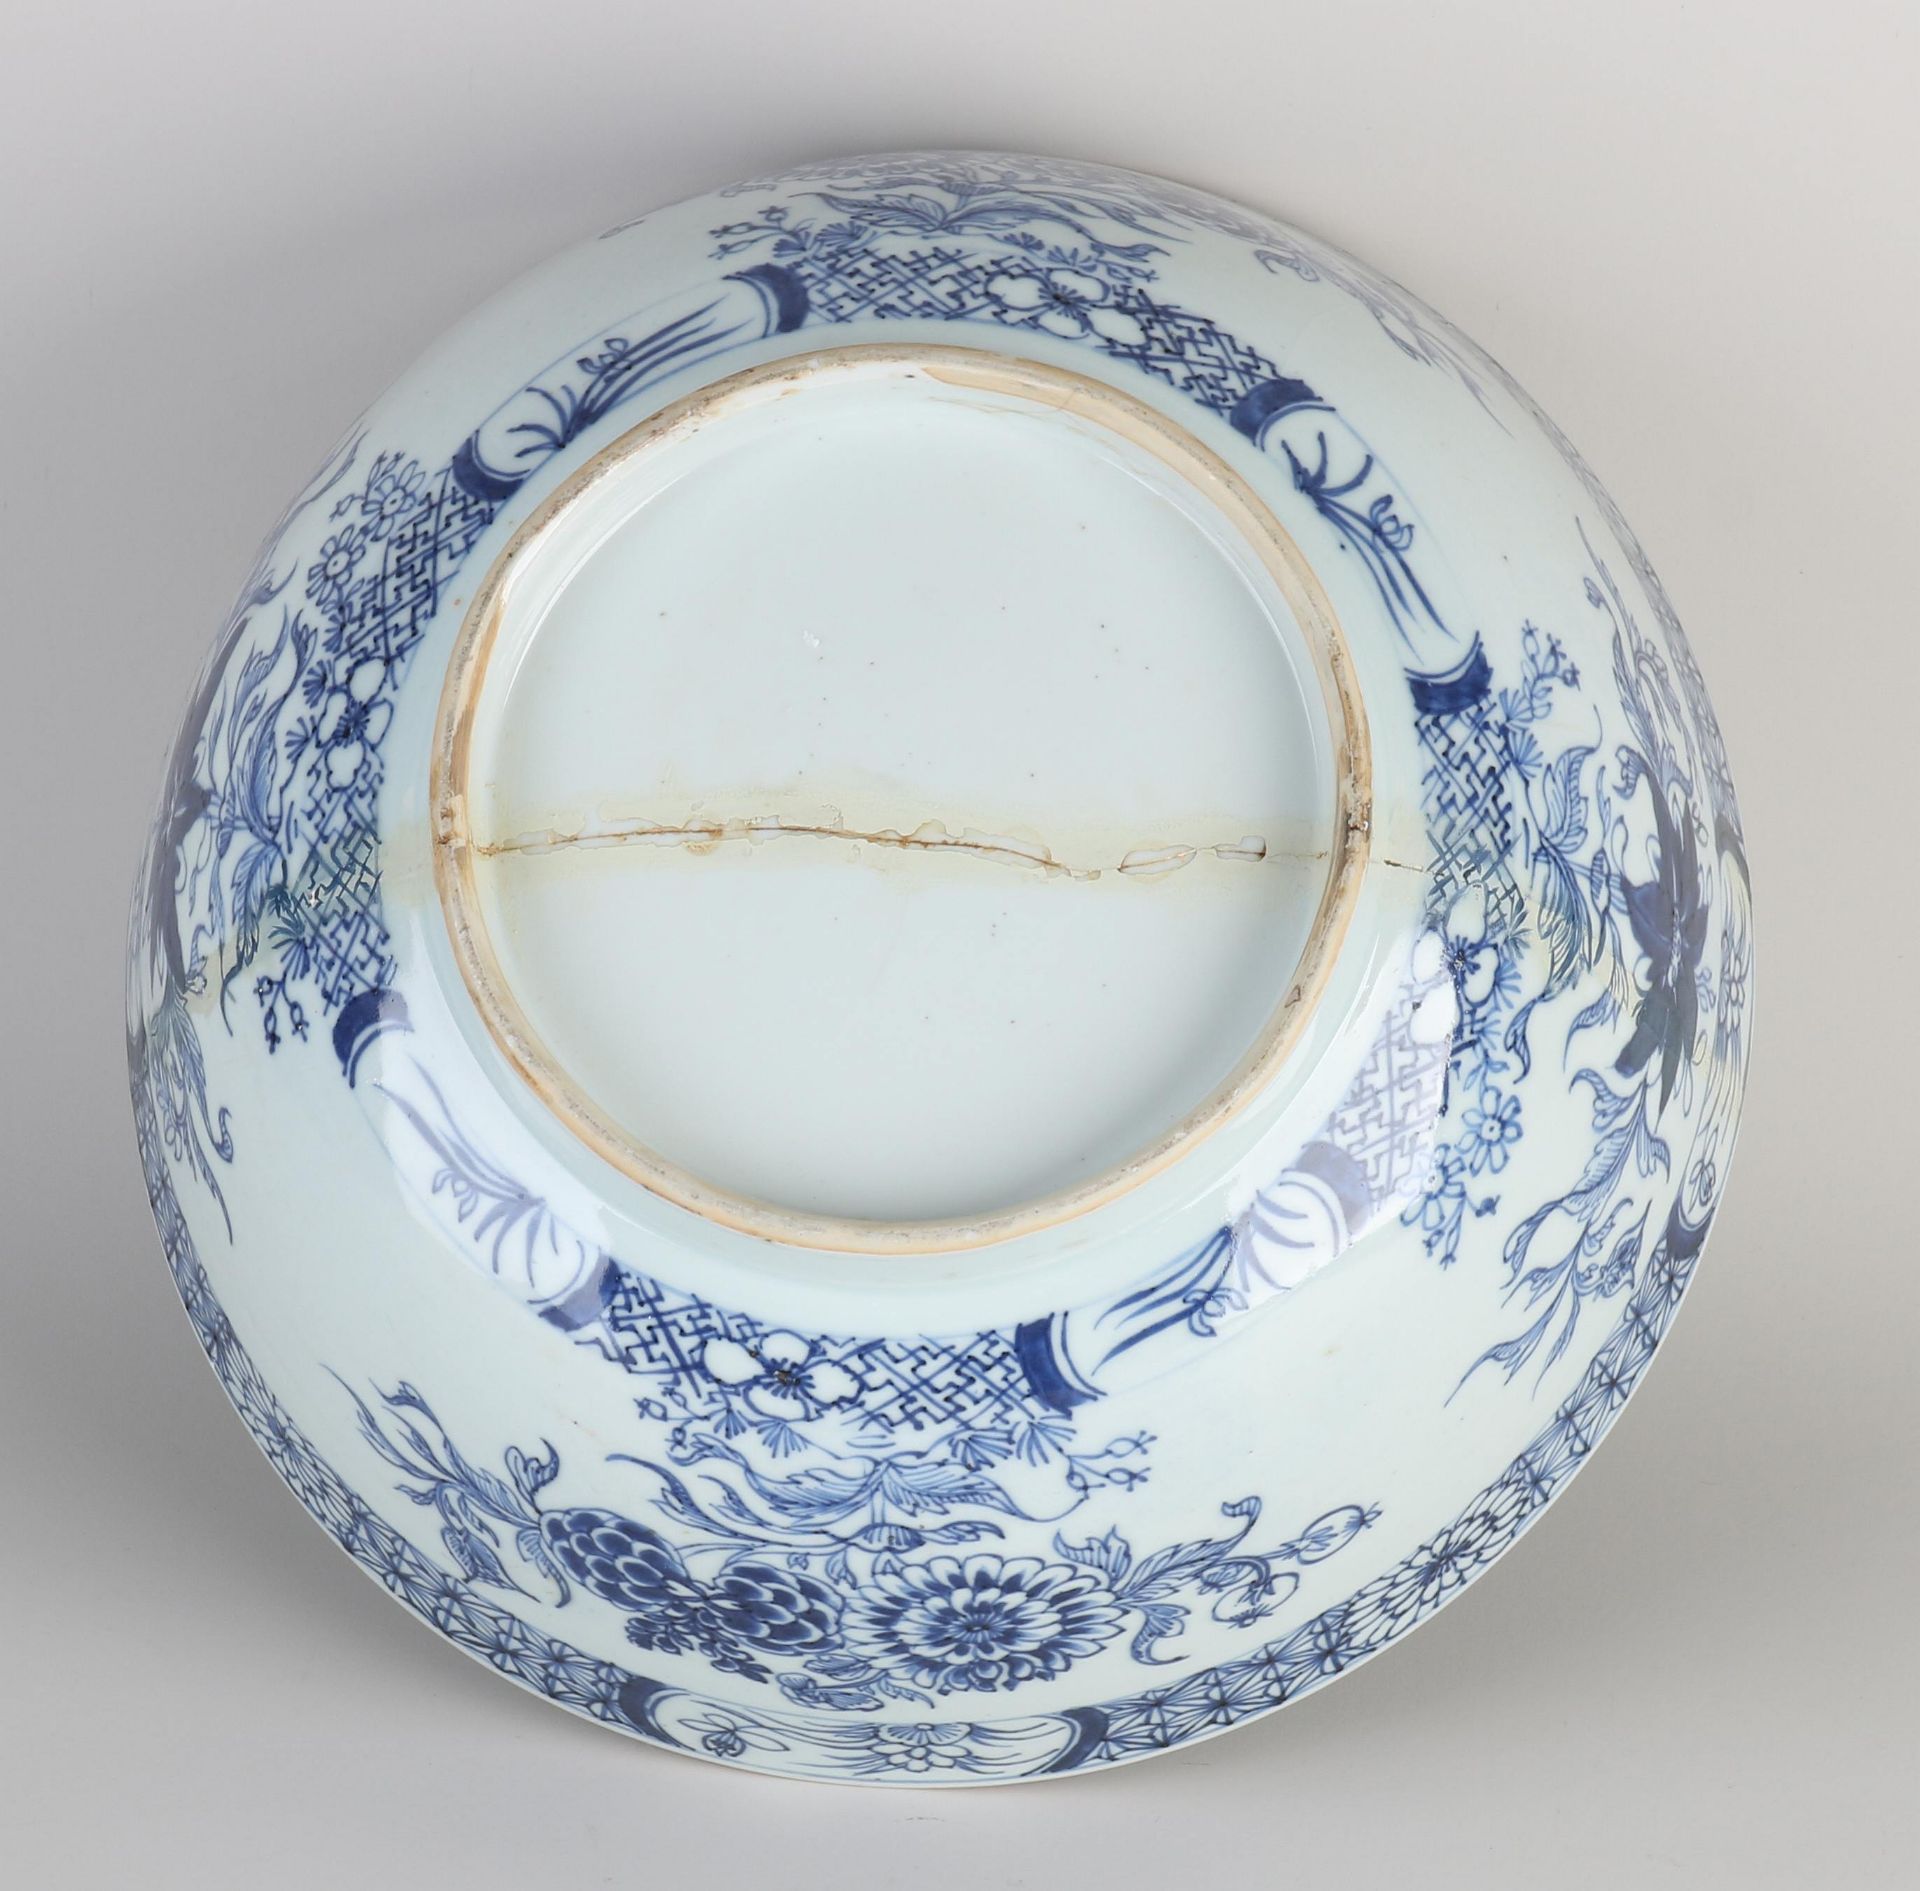 18th century Chinese bowl Ø 29 cm. - Image 2 of 2